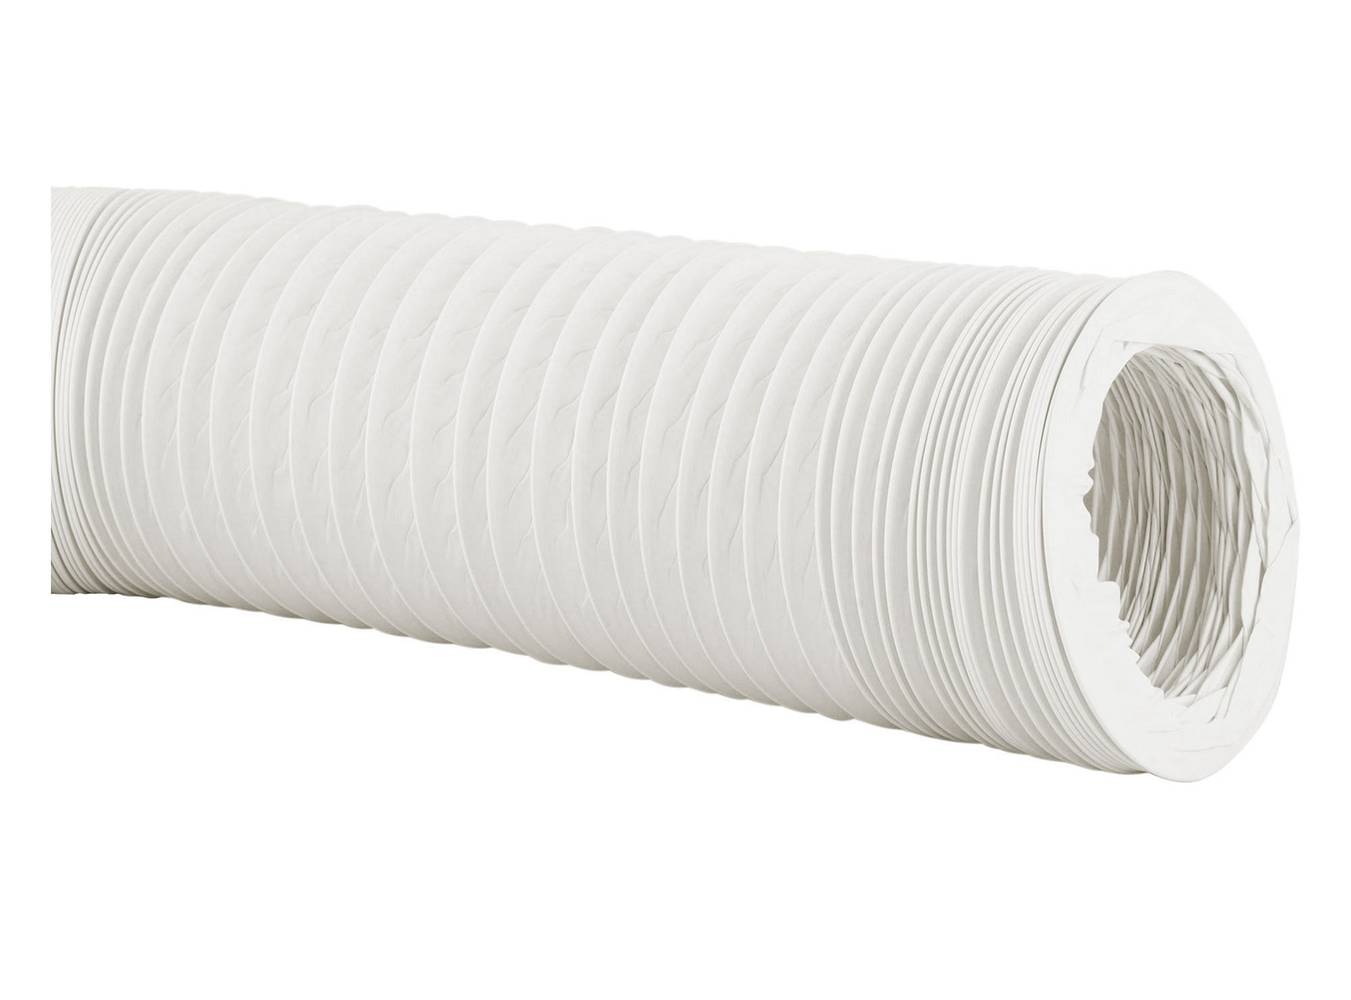 Isoplast ducto secadora 4'' 3 m flexible blanco (1 ducto)